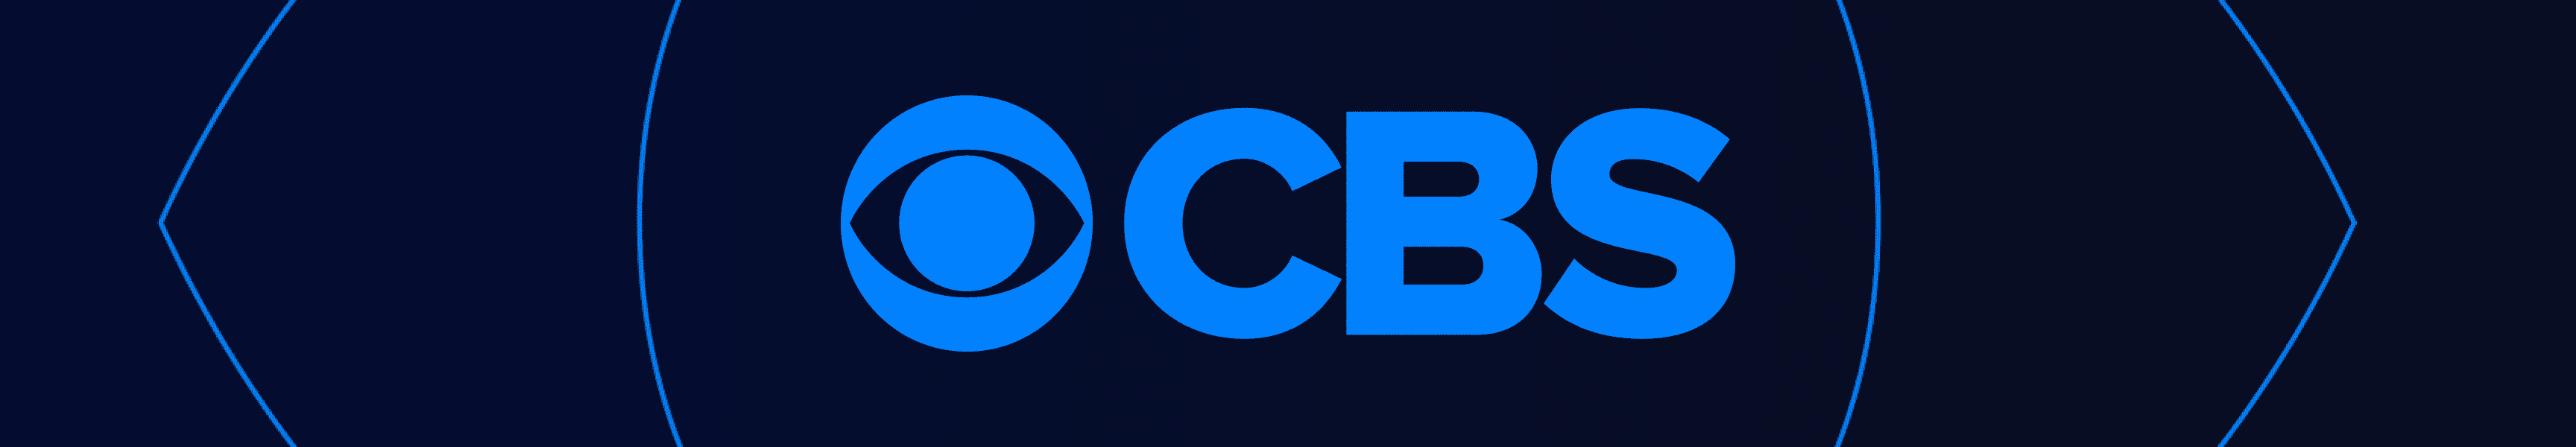 Pôles CBS